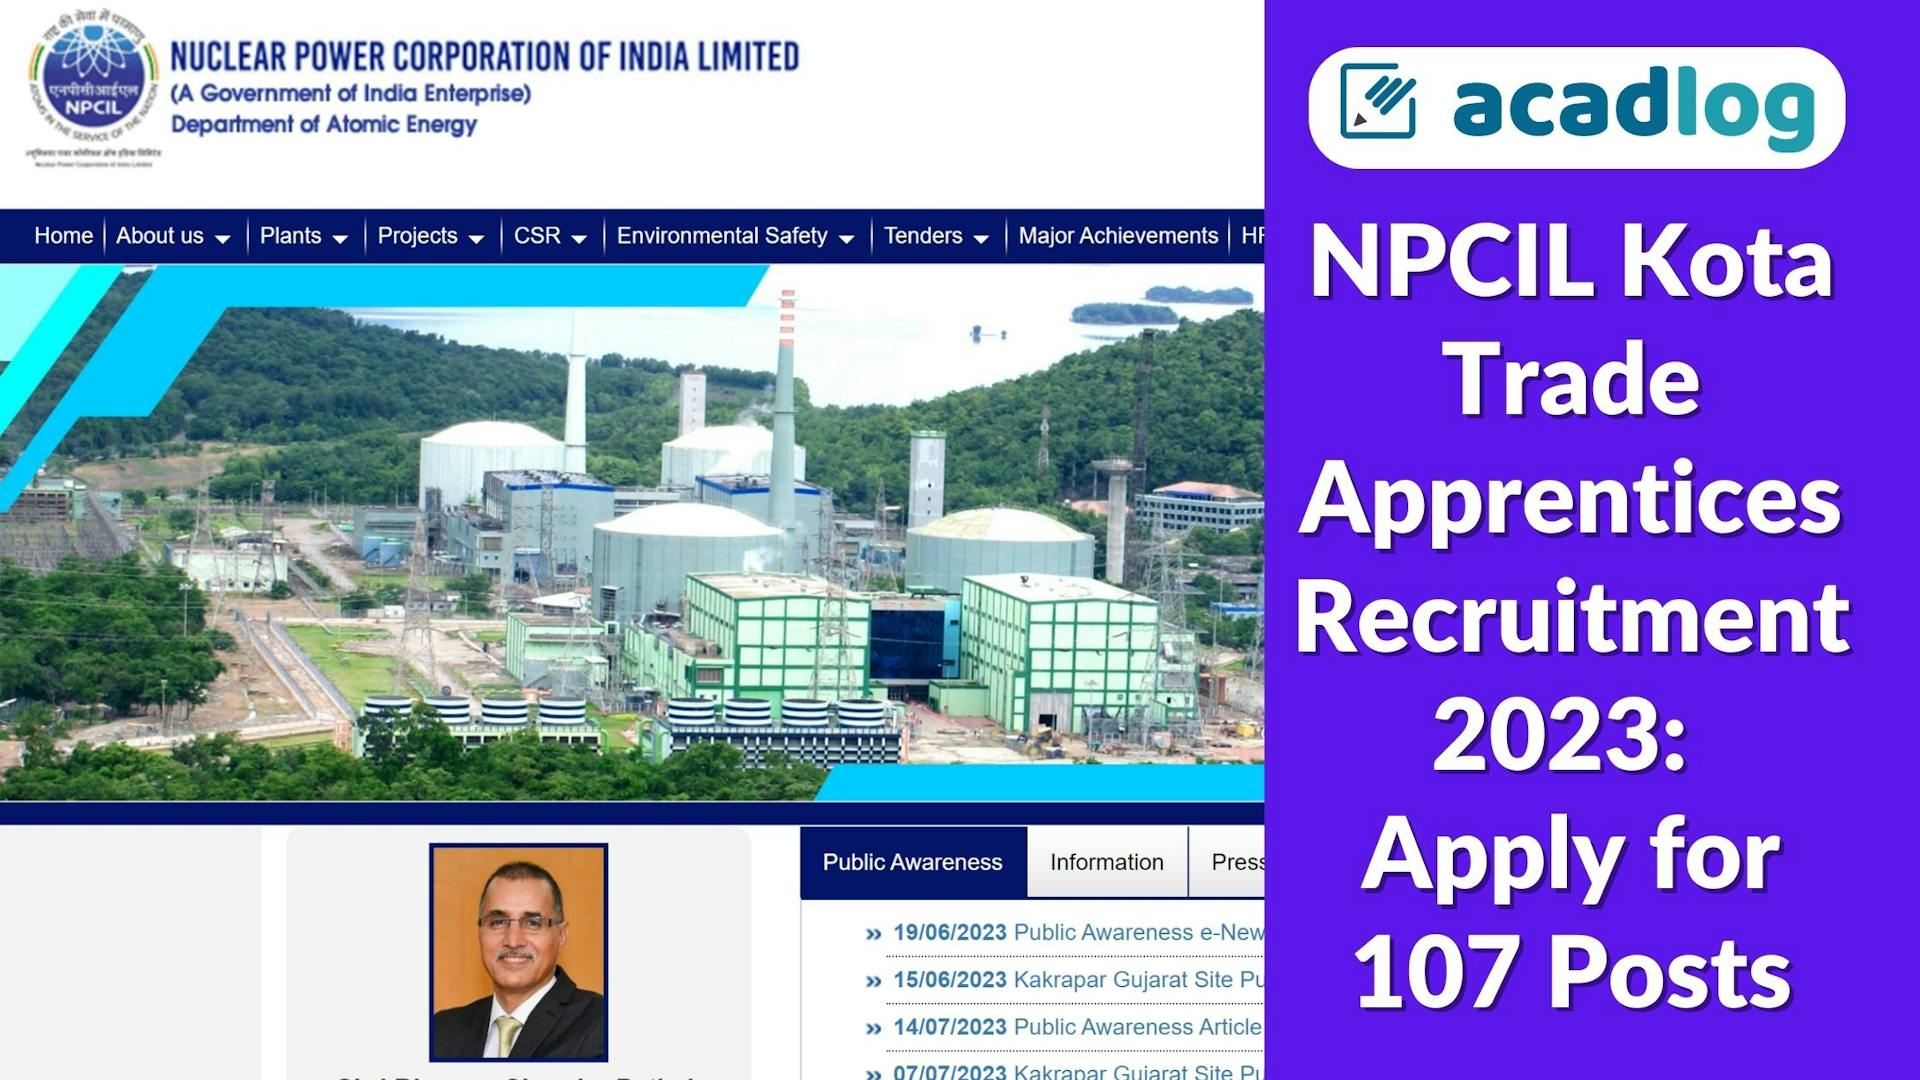 NPCIL Kota Trade Apprentices Recruitment 2023: Apply for 107 Posts